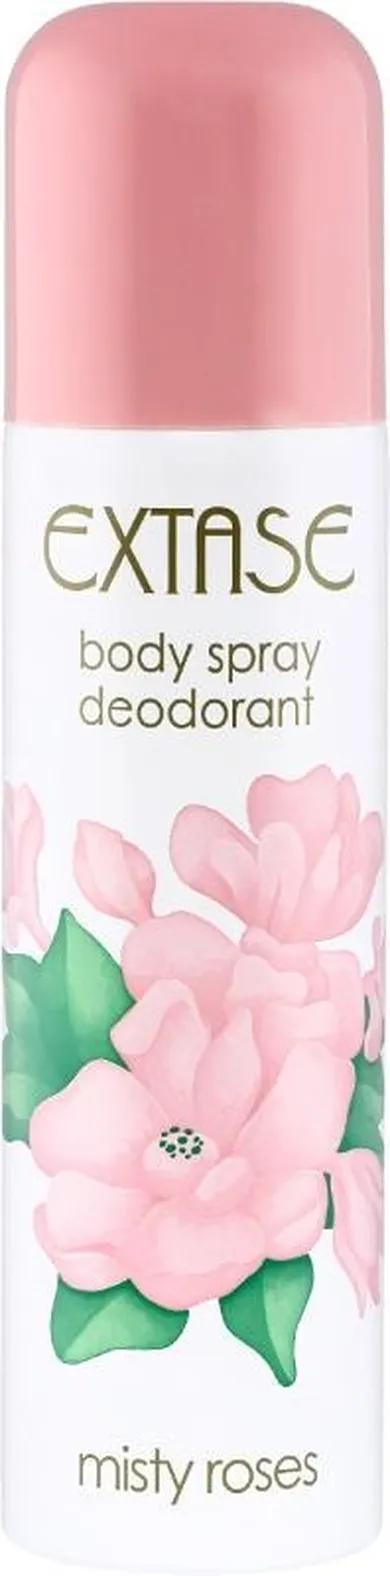 Extase, dezodorant, body spray, misty roses, 150 ml